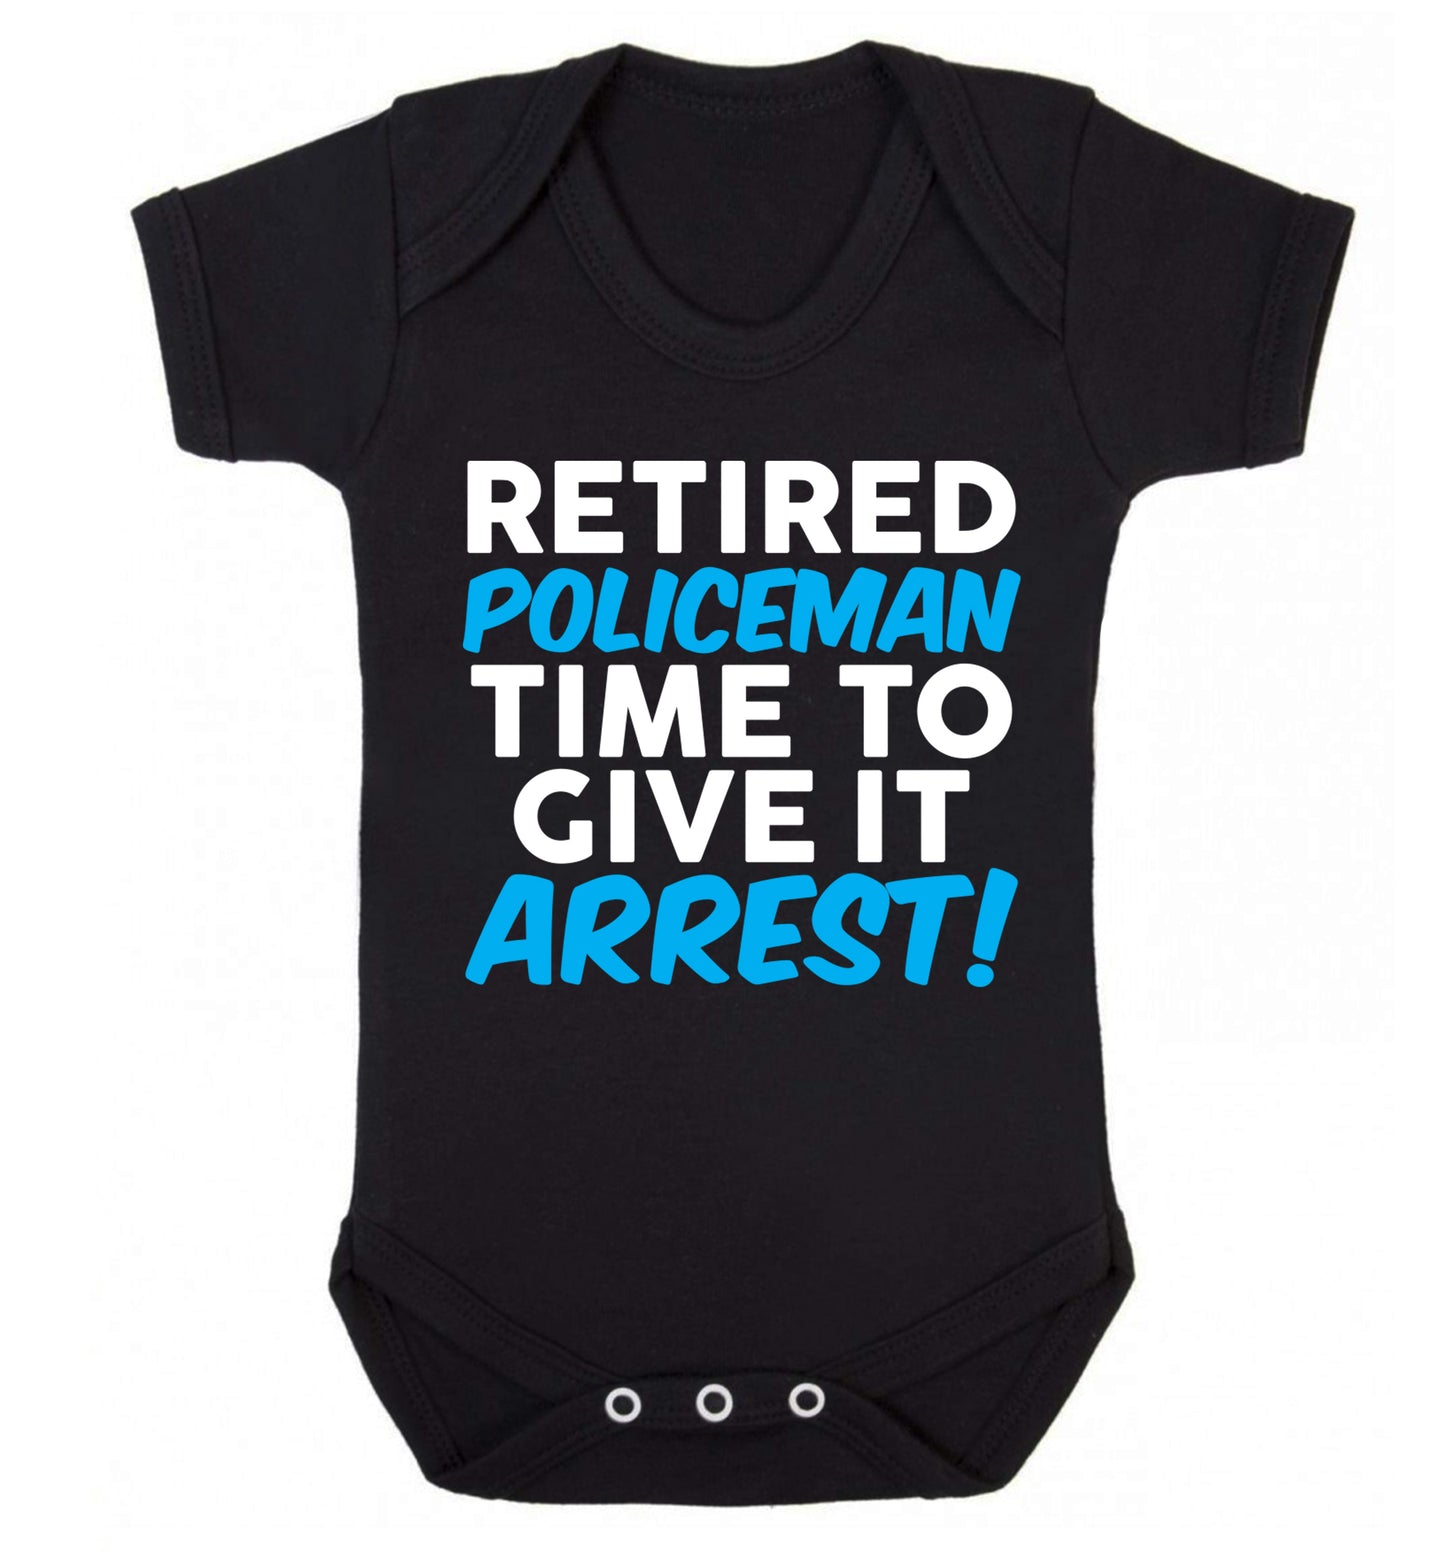 Retired policeman give it arresst! Baby Vest black 18-24 months